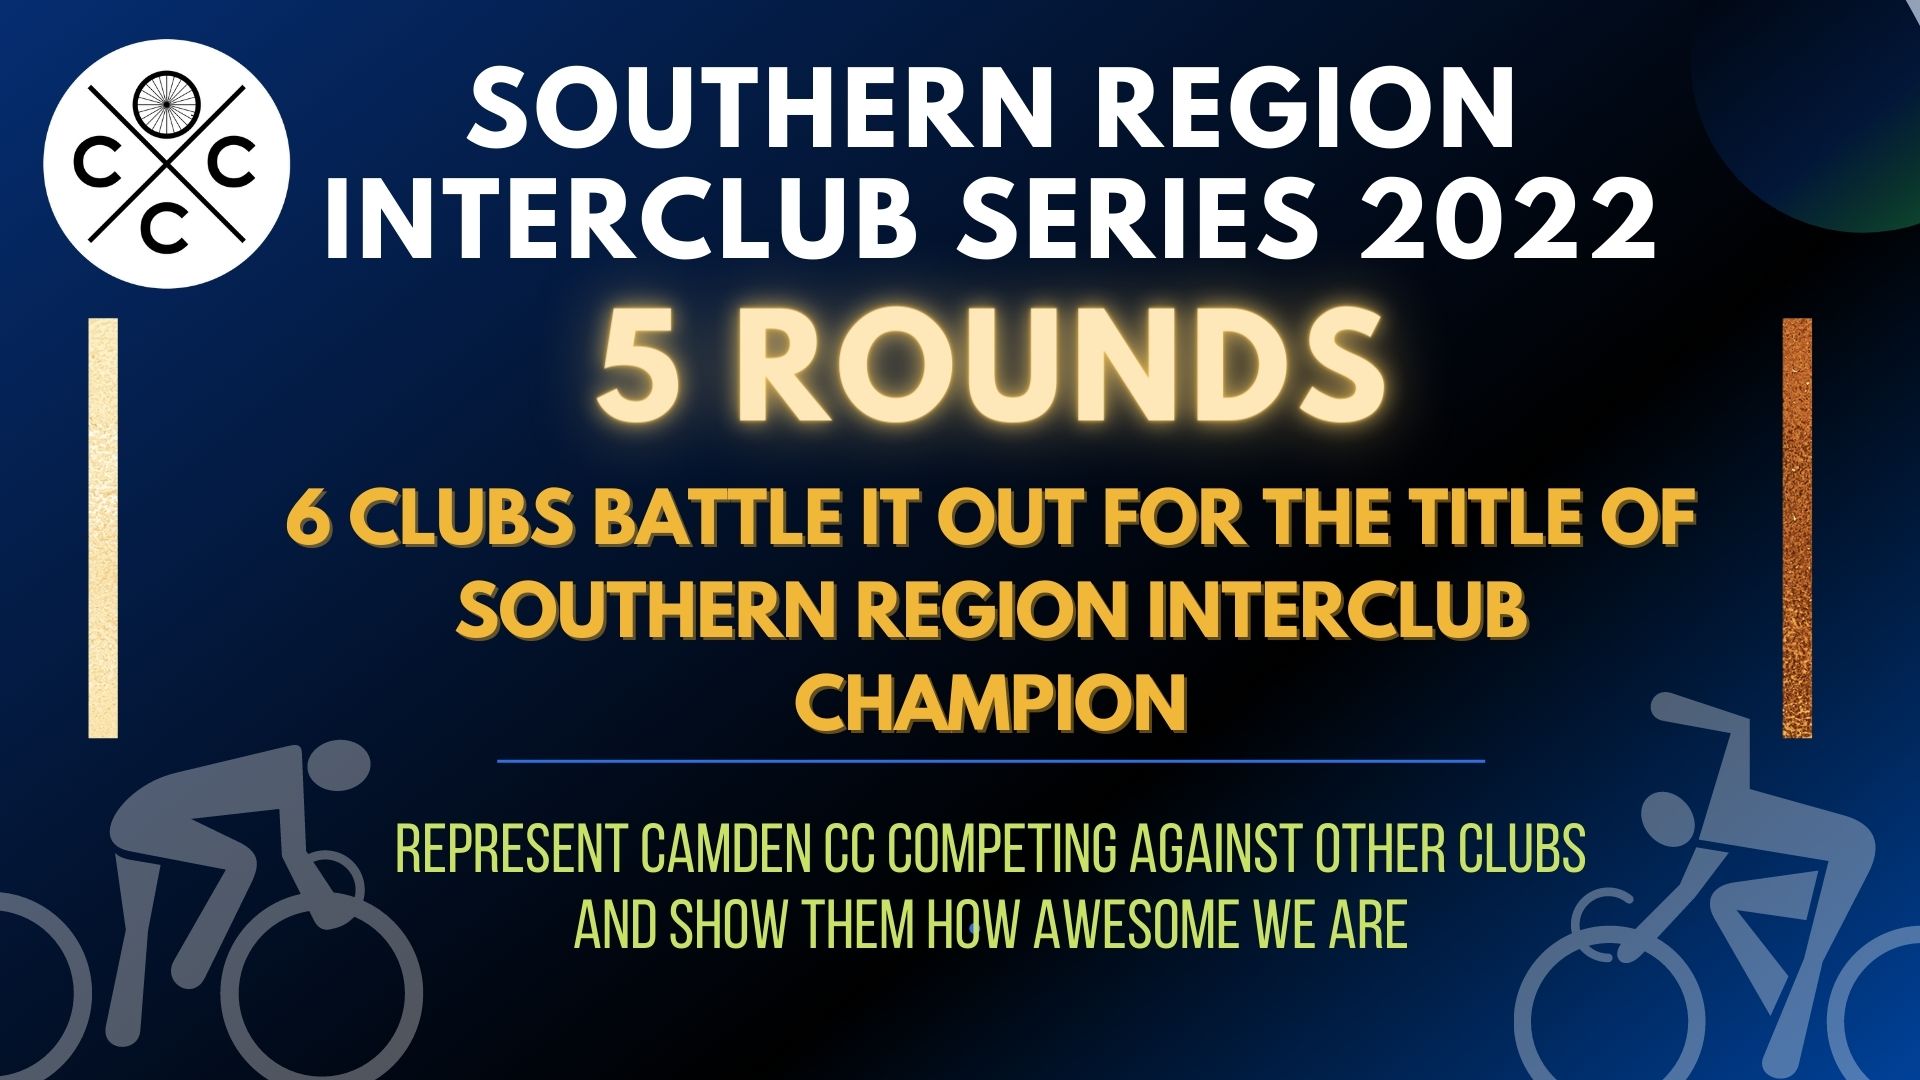 Southern Region interclub series 2022